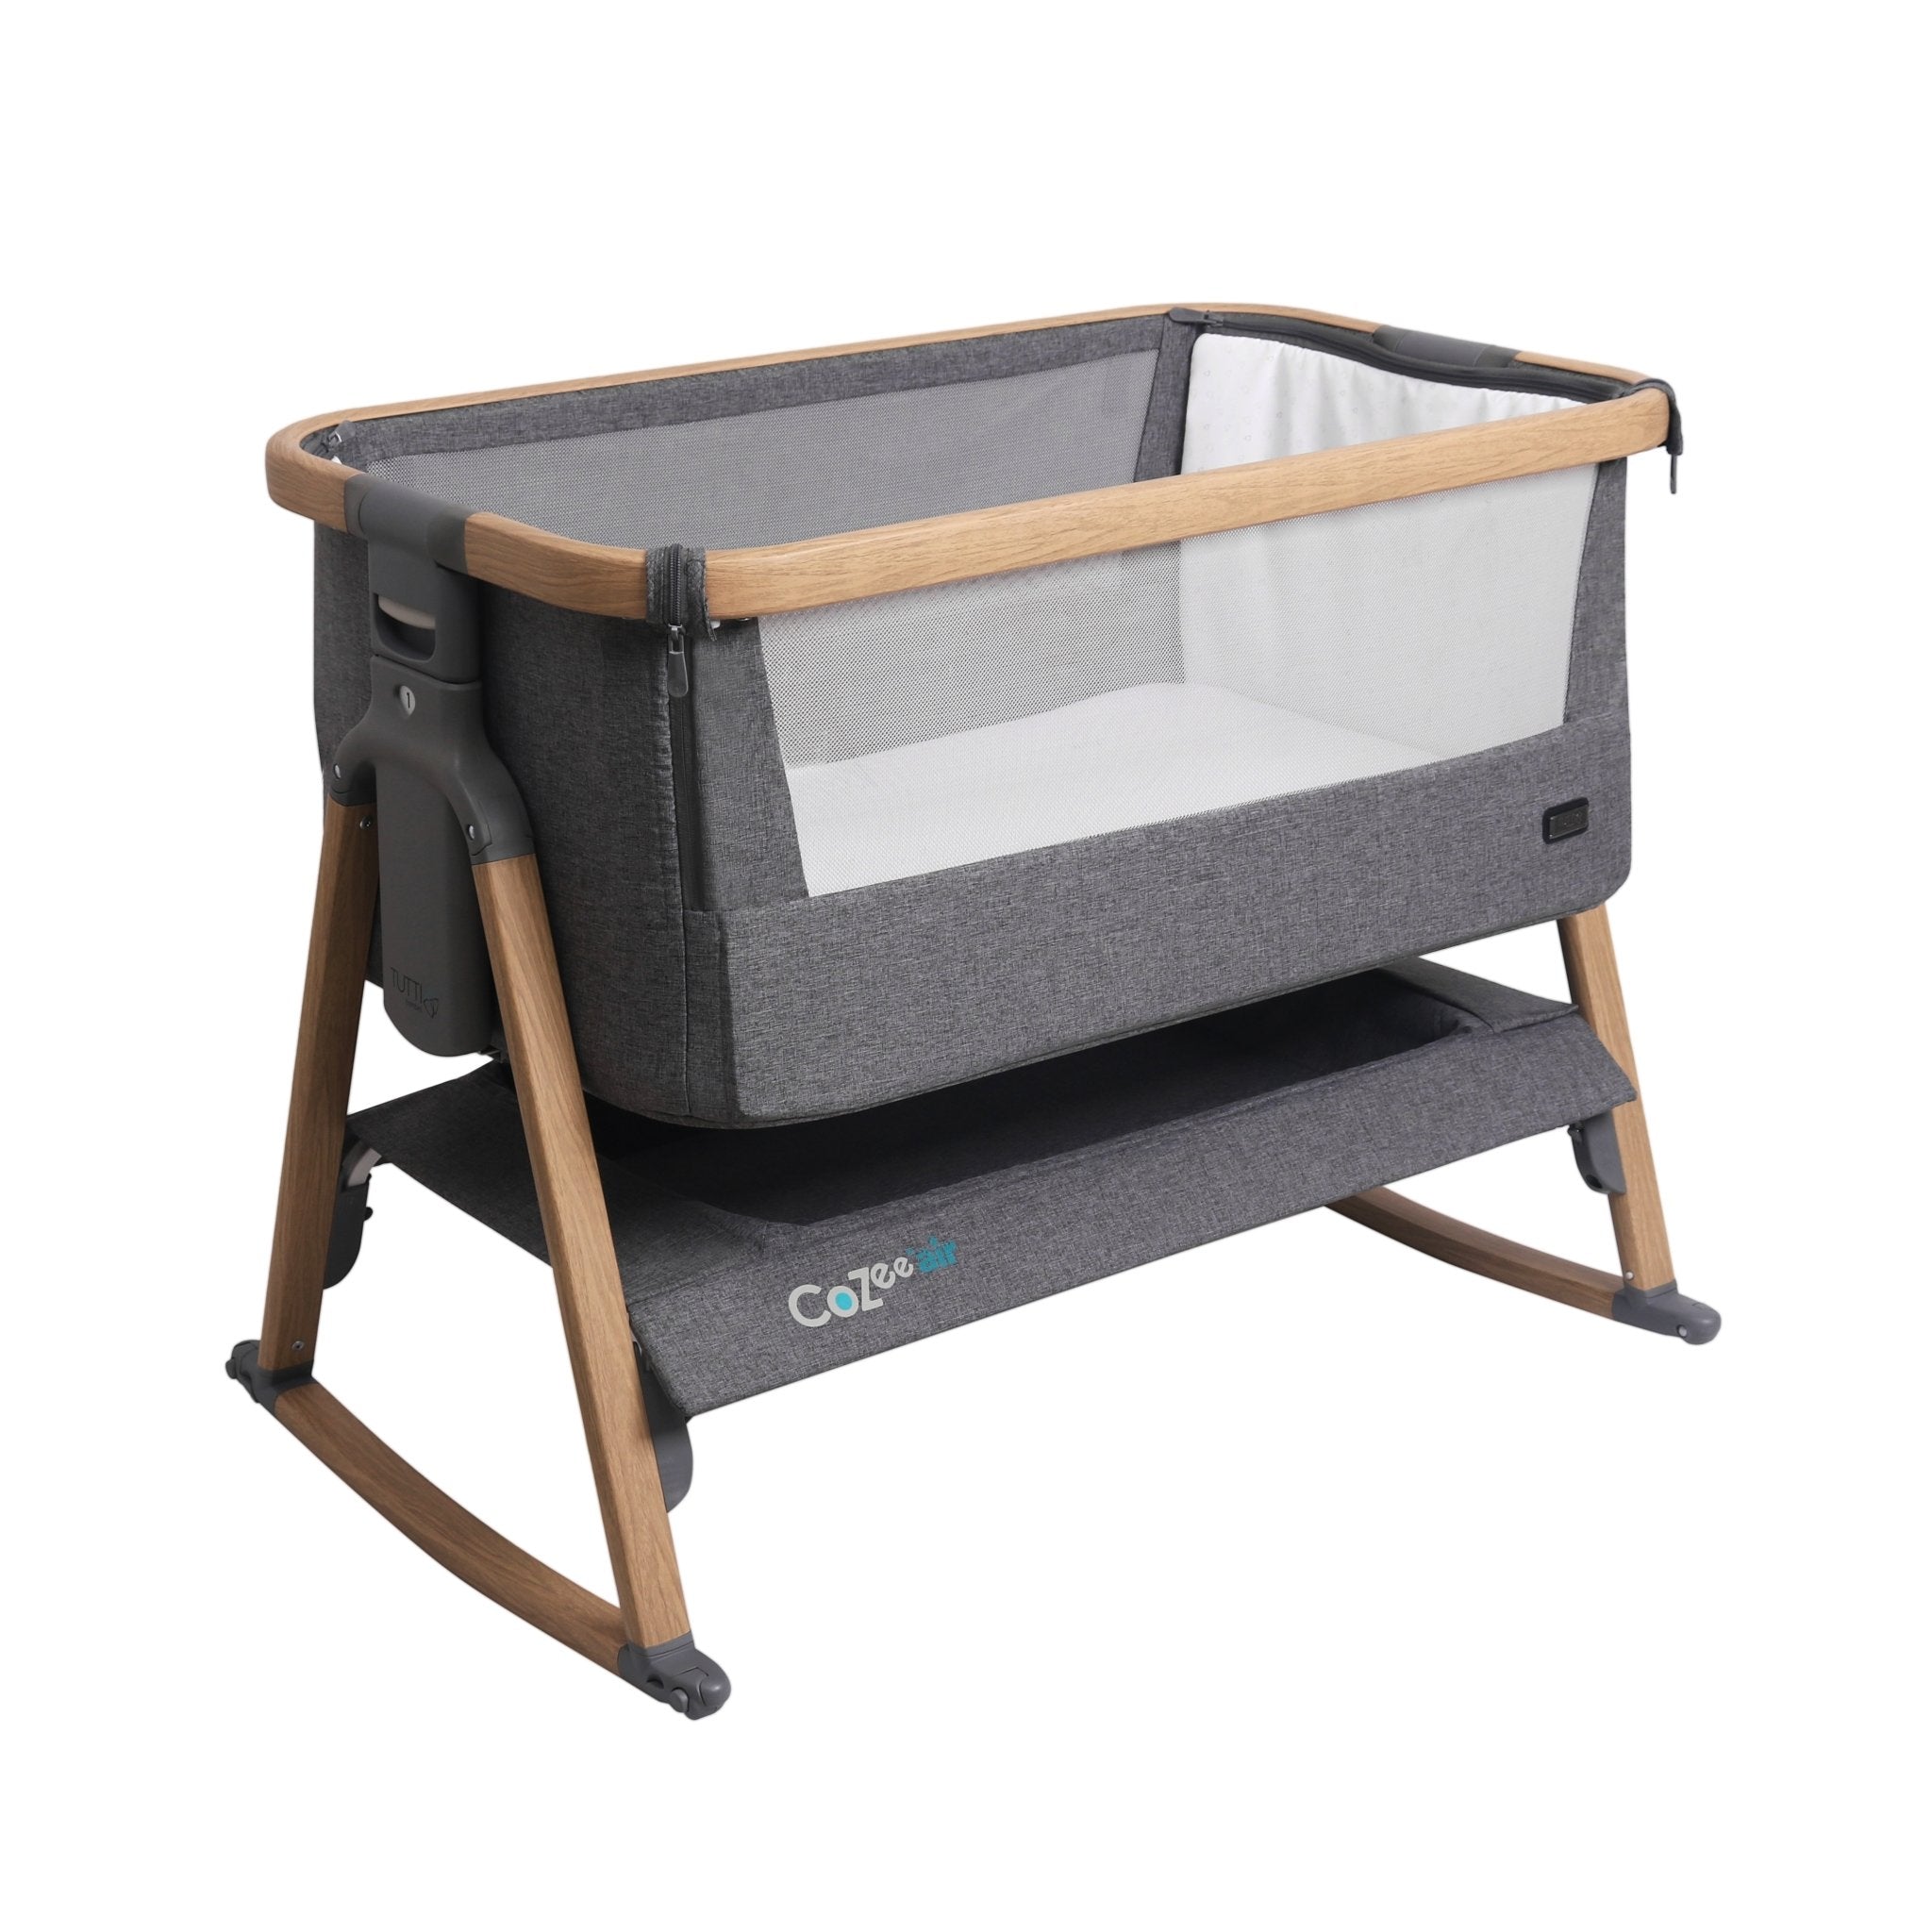 Tutti Bambi CoZee Air Bedside Crib - ANB Baby -5060145958982$300 - $500